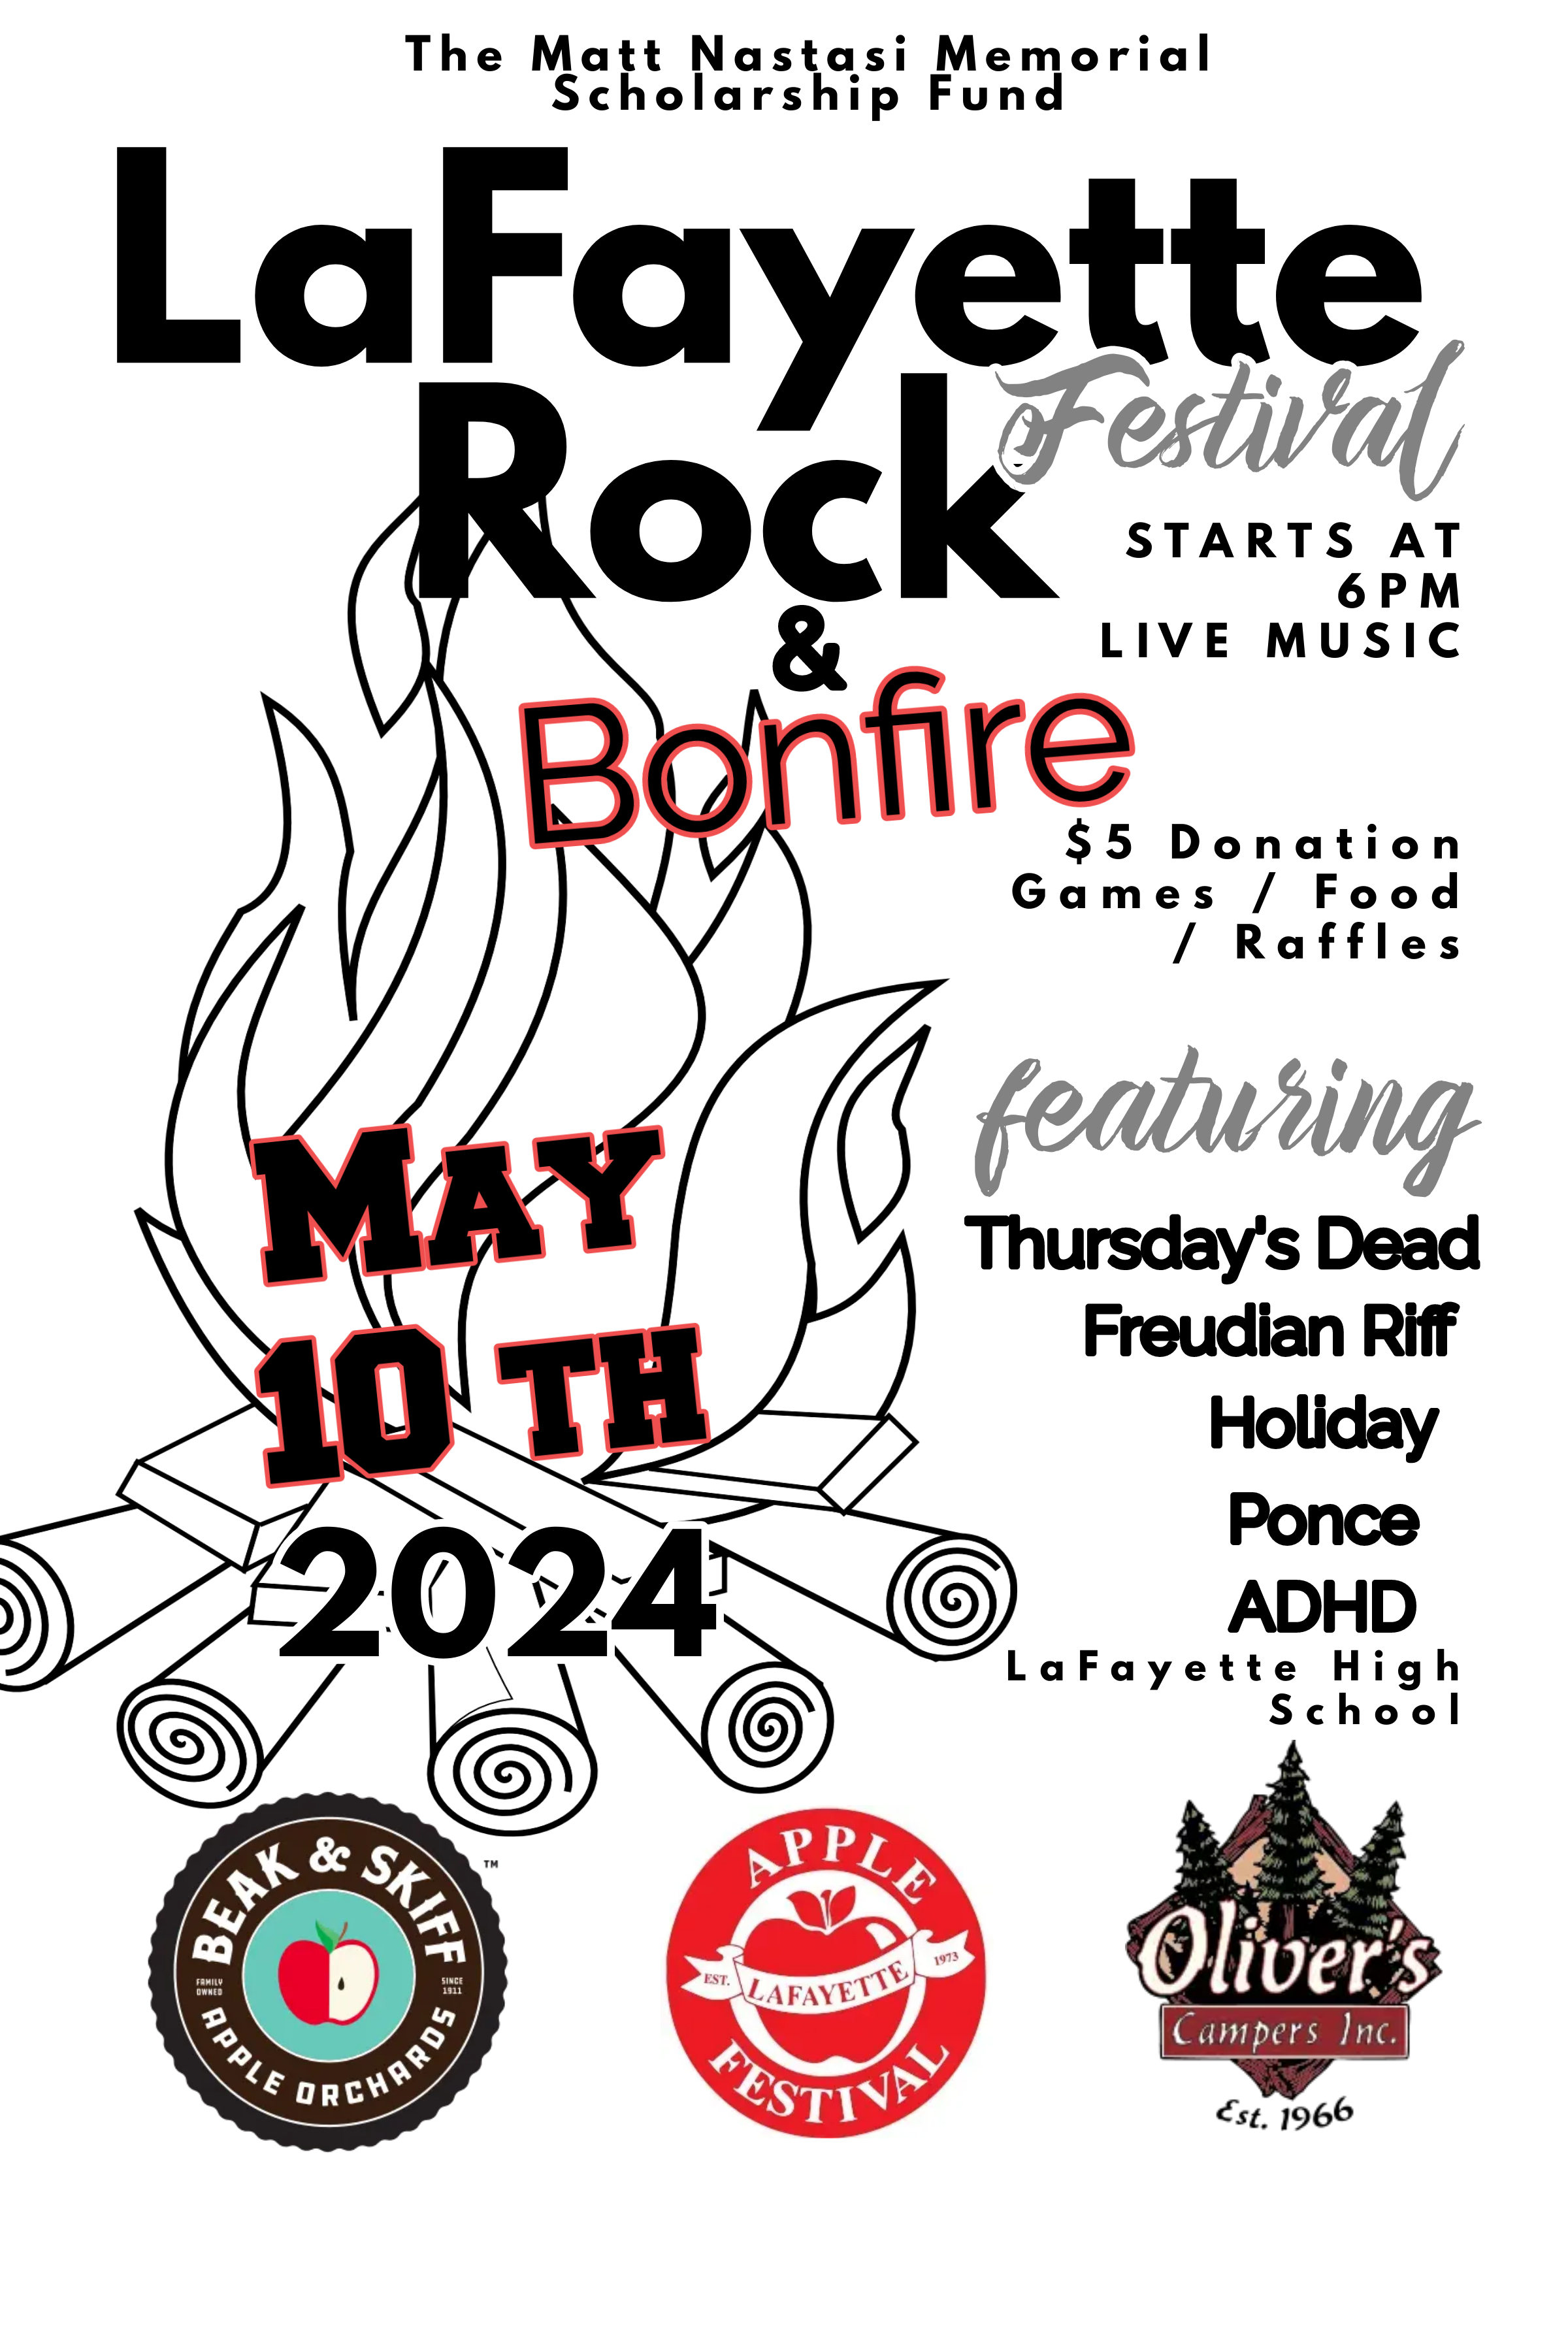 flyer for lafayette live music festival and bonfire